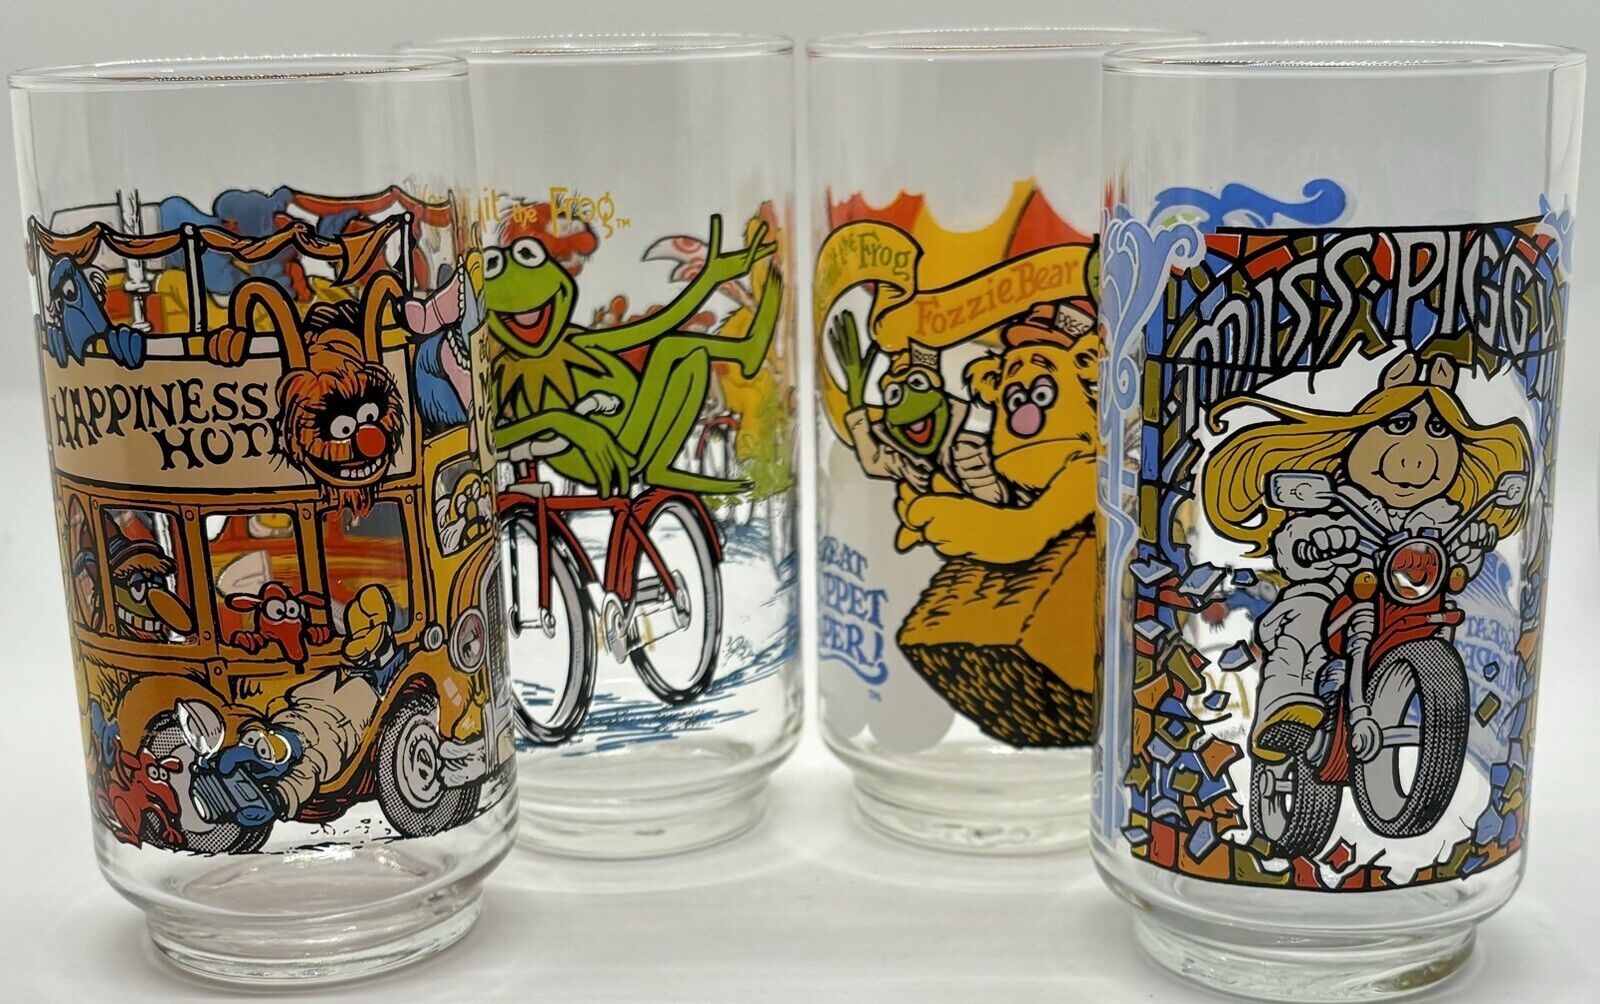 VTG 1981 McDonalds , The Great Muppet Caper Glasses, Complete Set Of 4